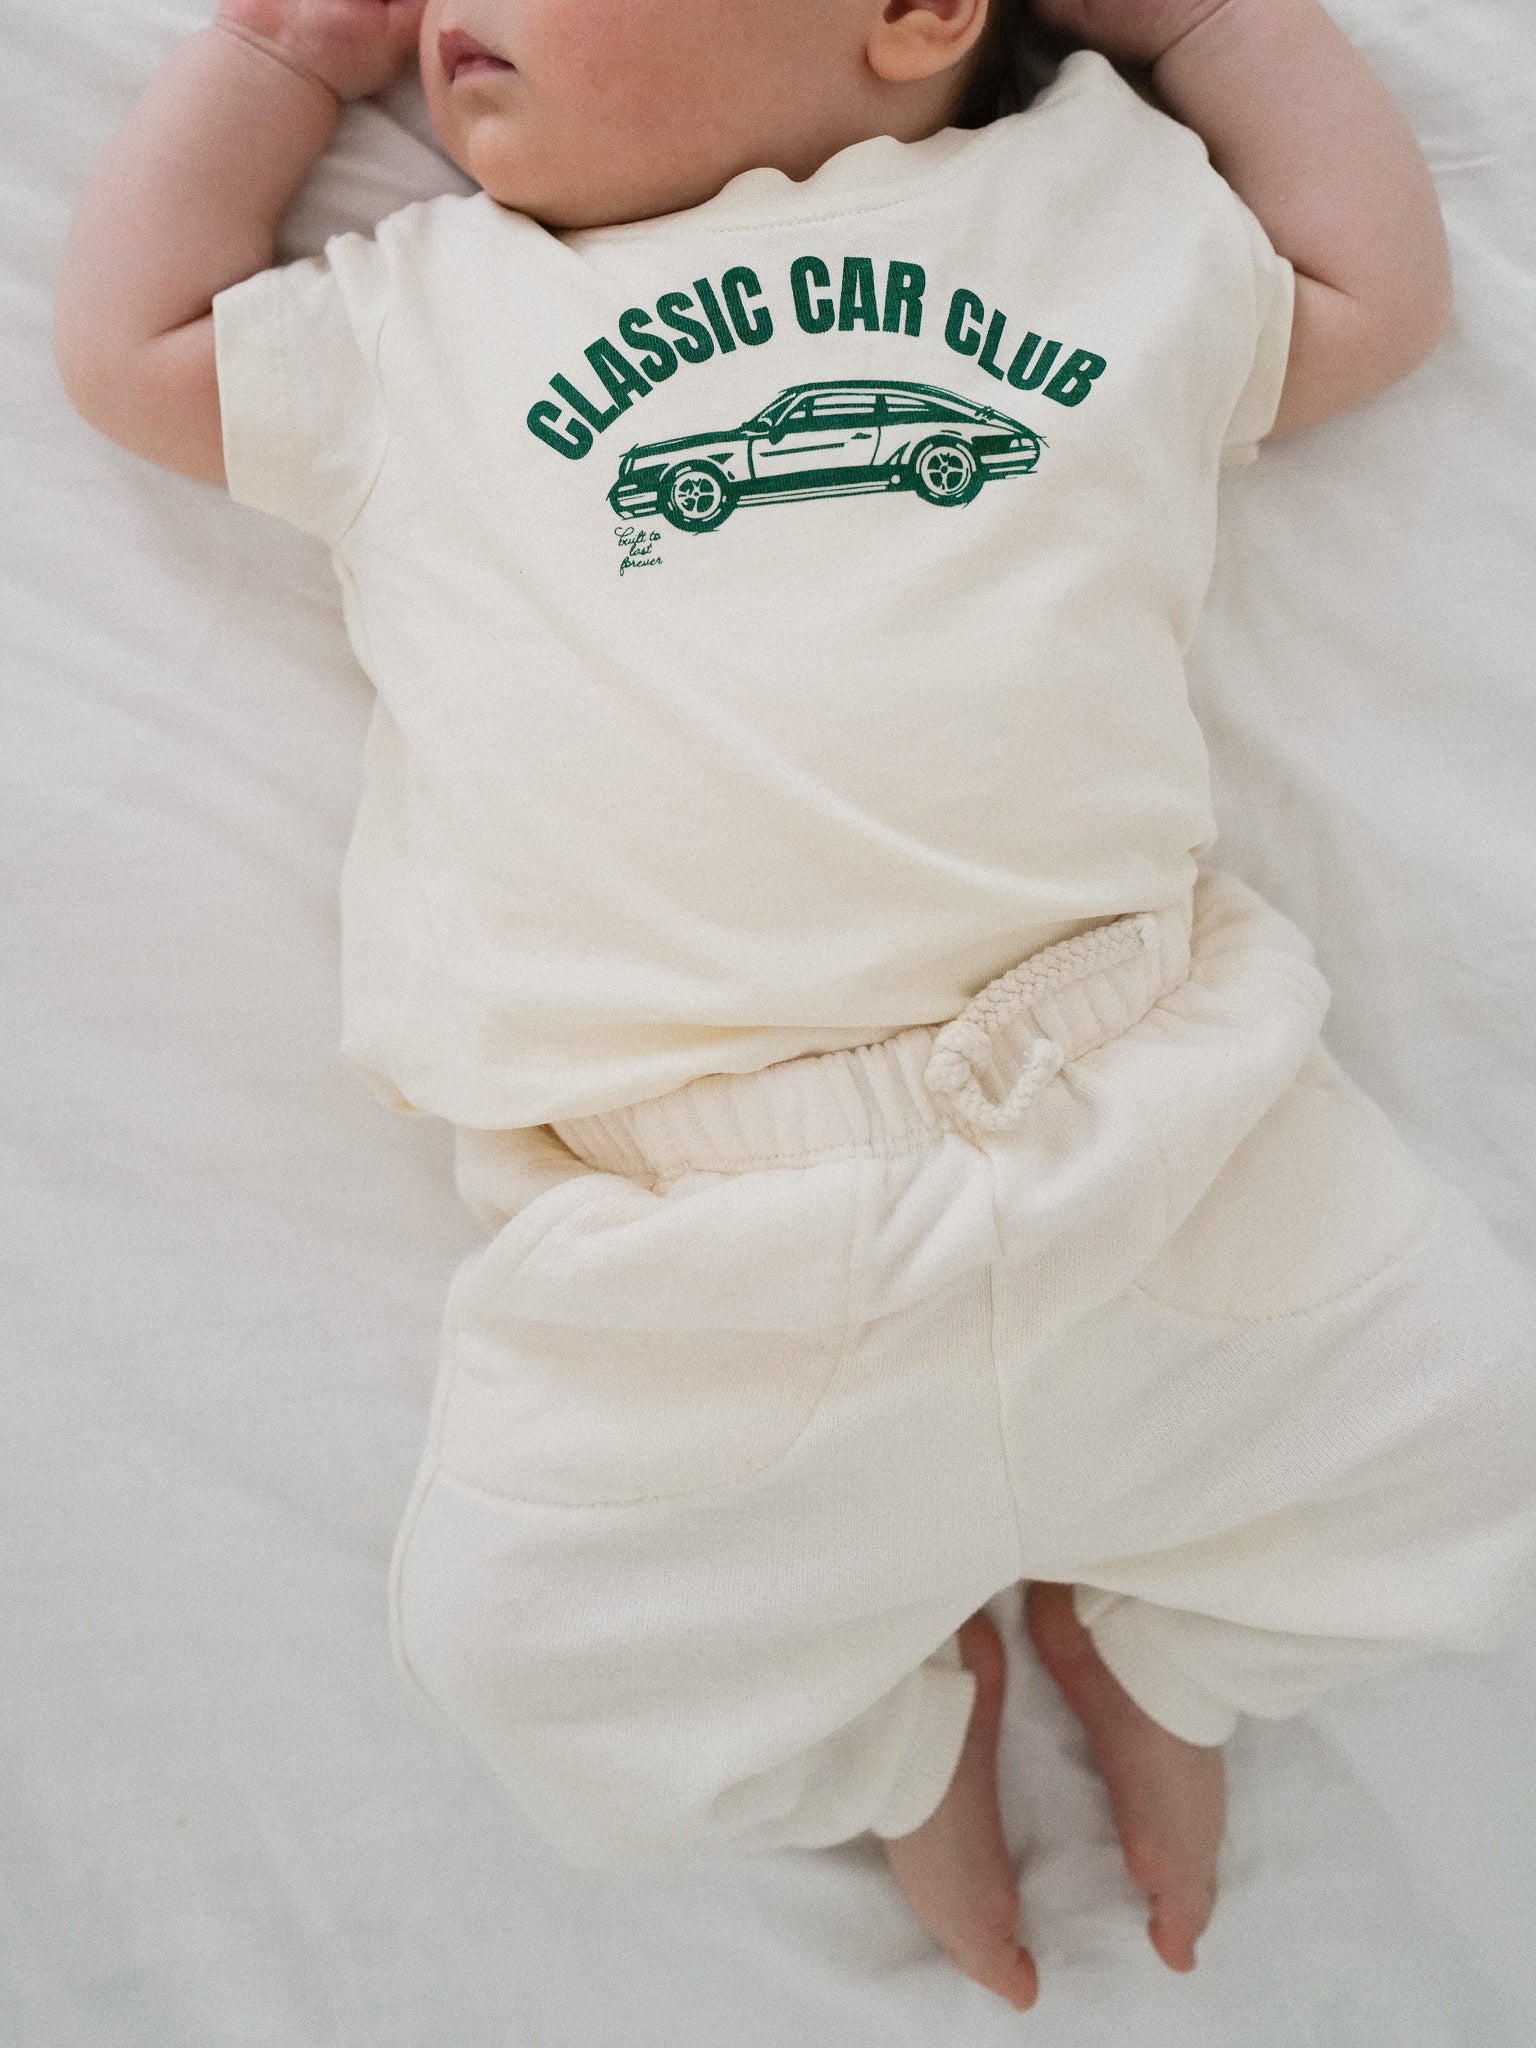 CLASSIC CAR CLUB Shirt Baby - FAMVIBES 